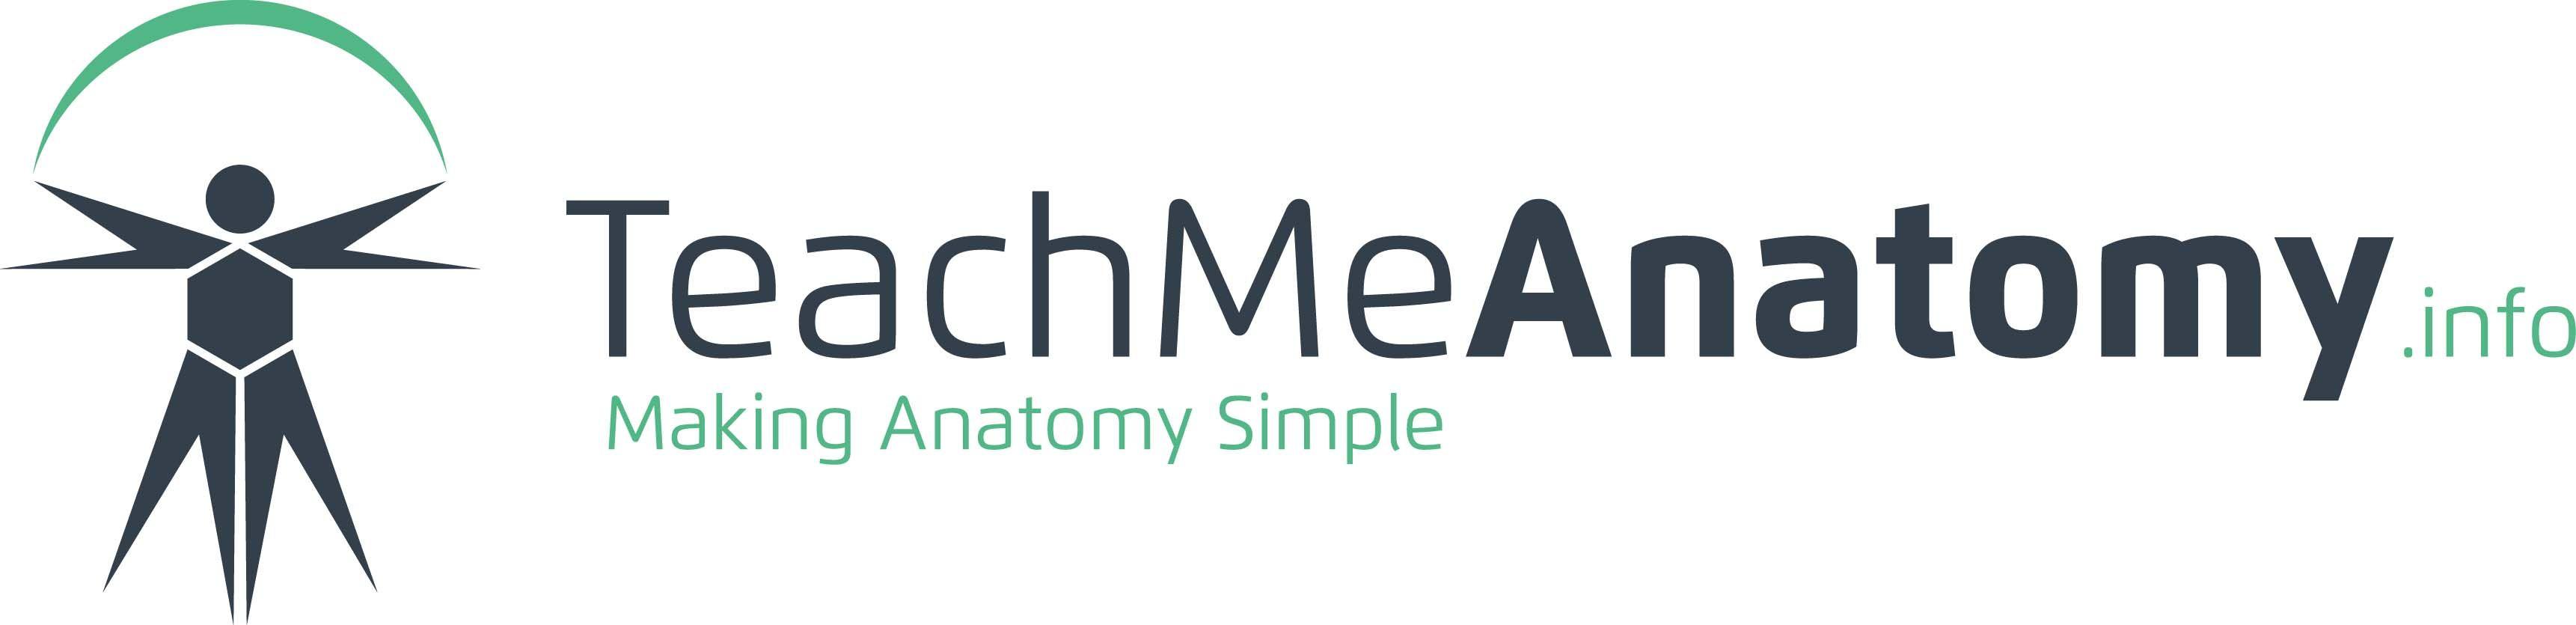 Anatomical Logo - TeachMeAnatomy - Making Anatomy Simple